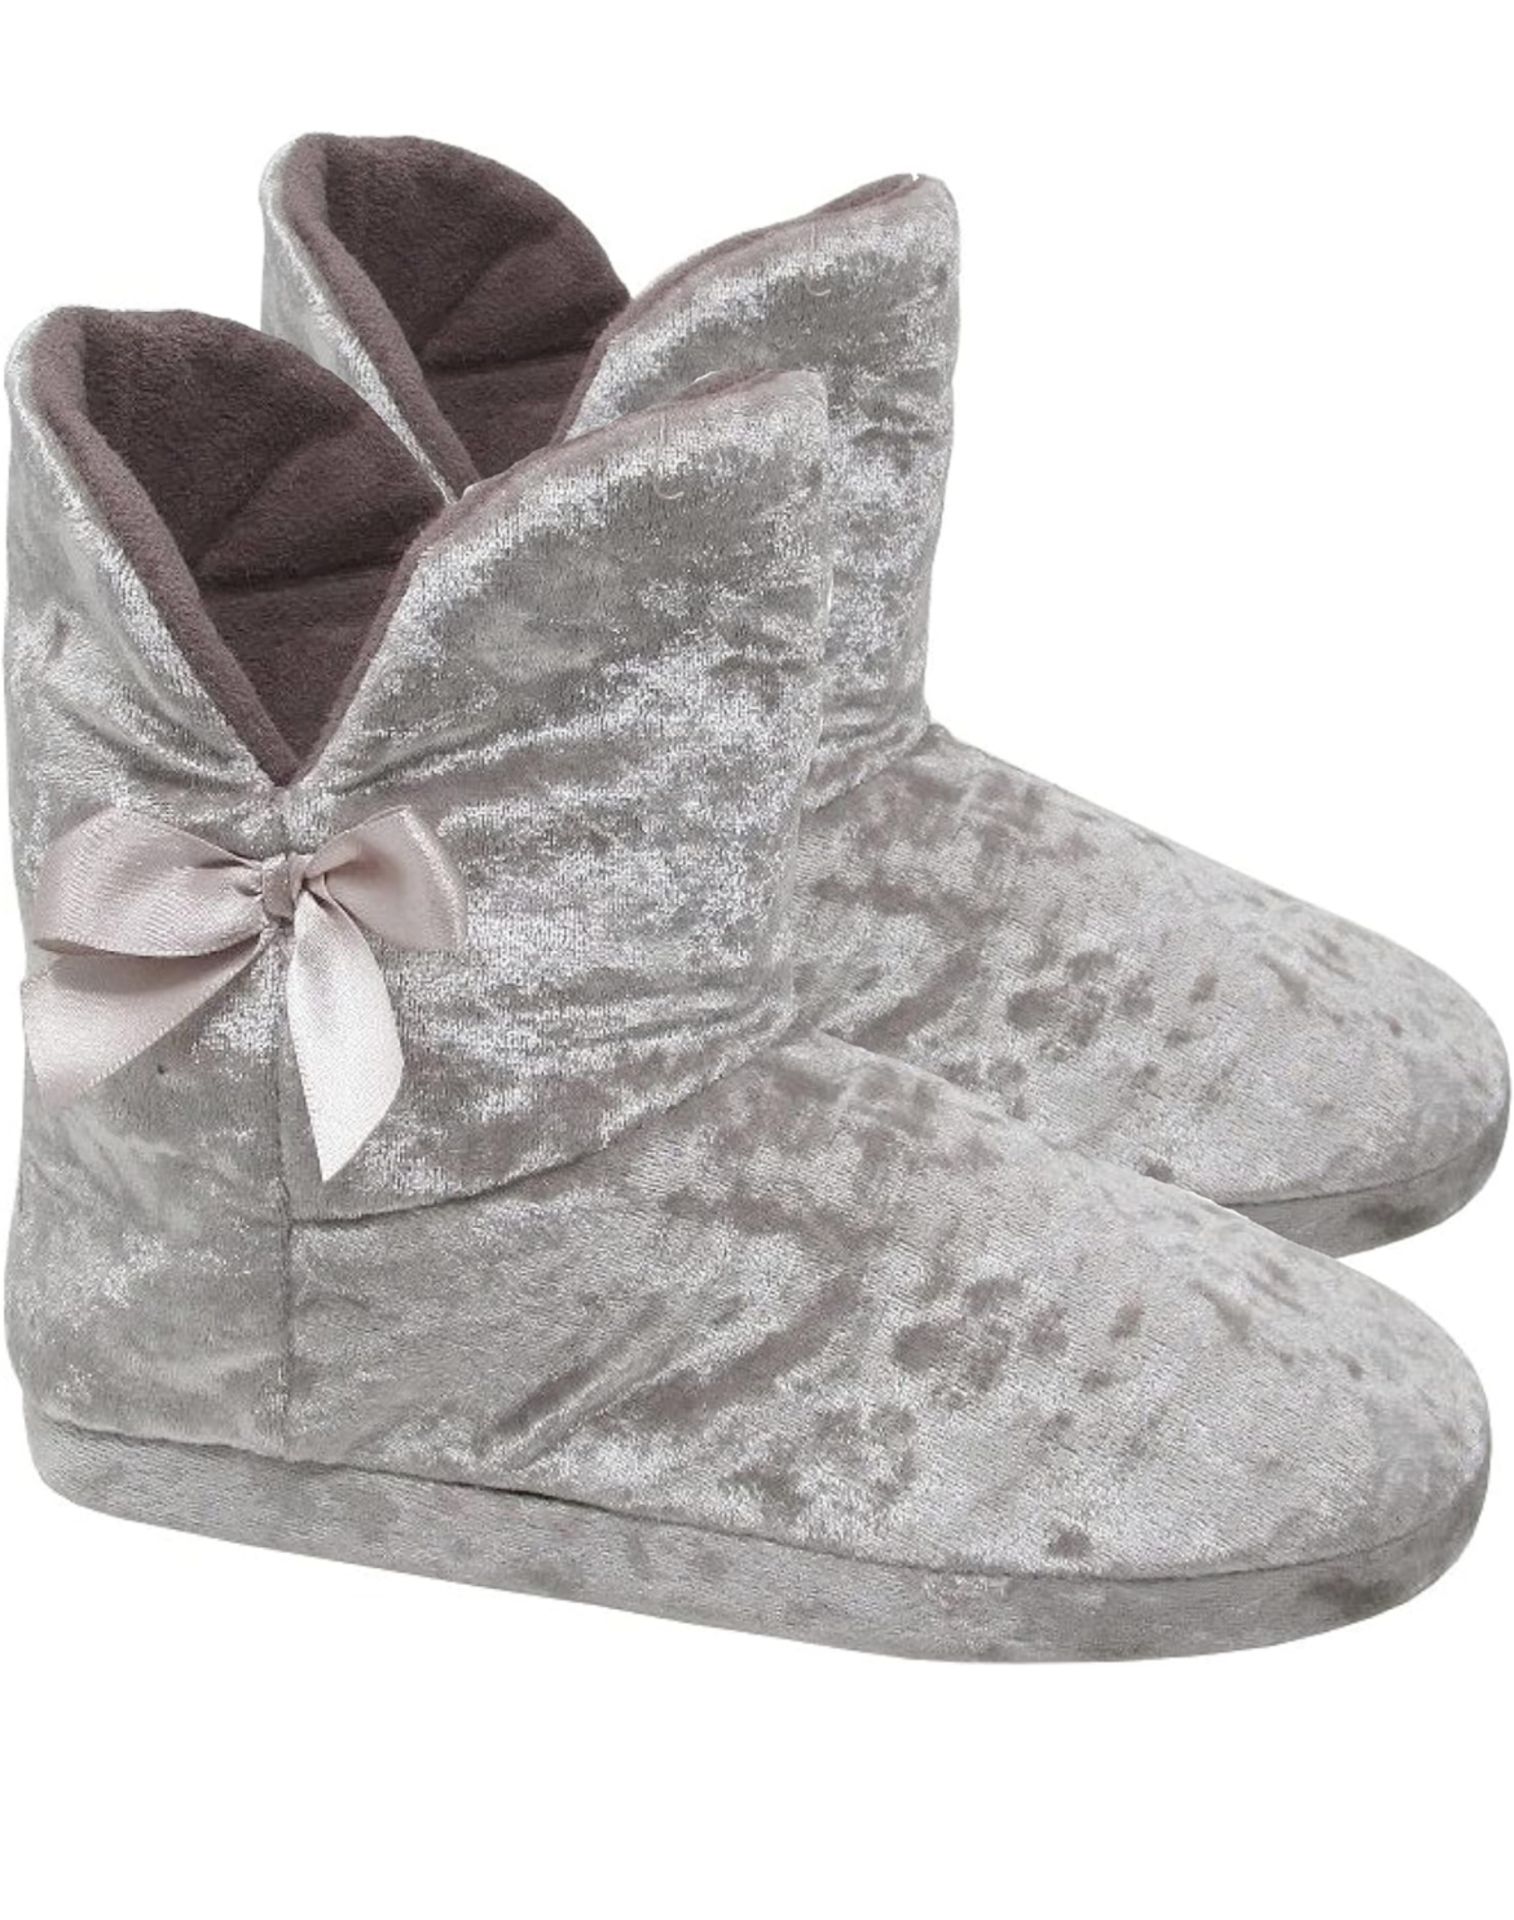 12 x Purdashian Ladies Slippers | Womens Slipper Boots | Womens Slippers | Warm Fluffy Slippers